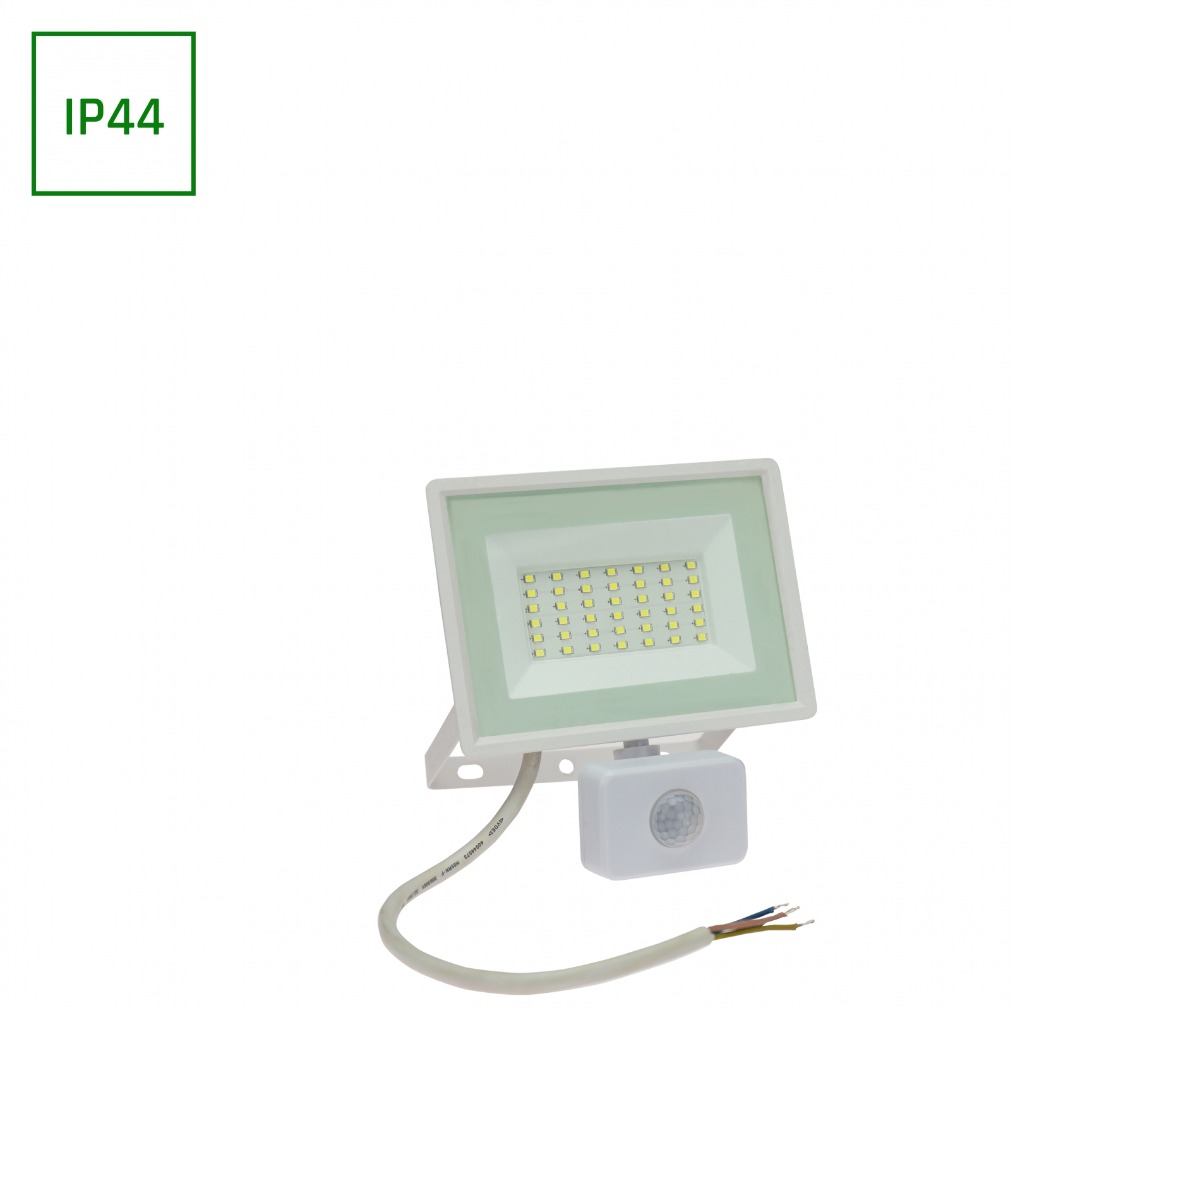 LED Strahler, LED Fluter & Baustrahler Weiß 30Watt Mit Bewegungssensor IP44